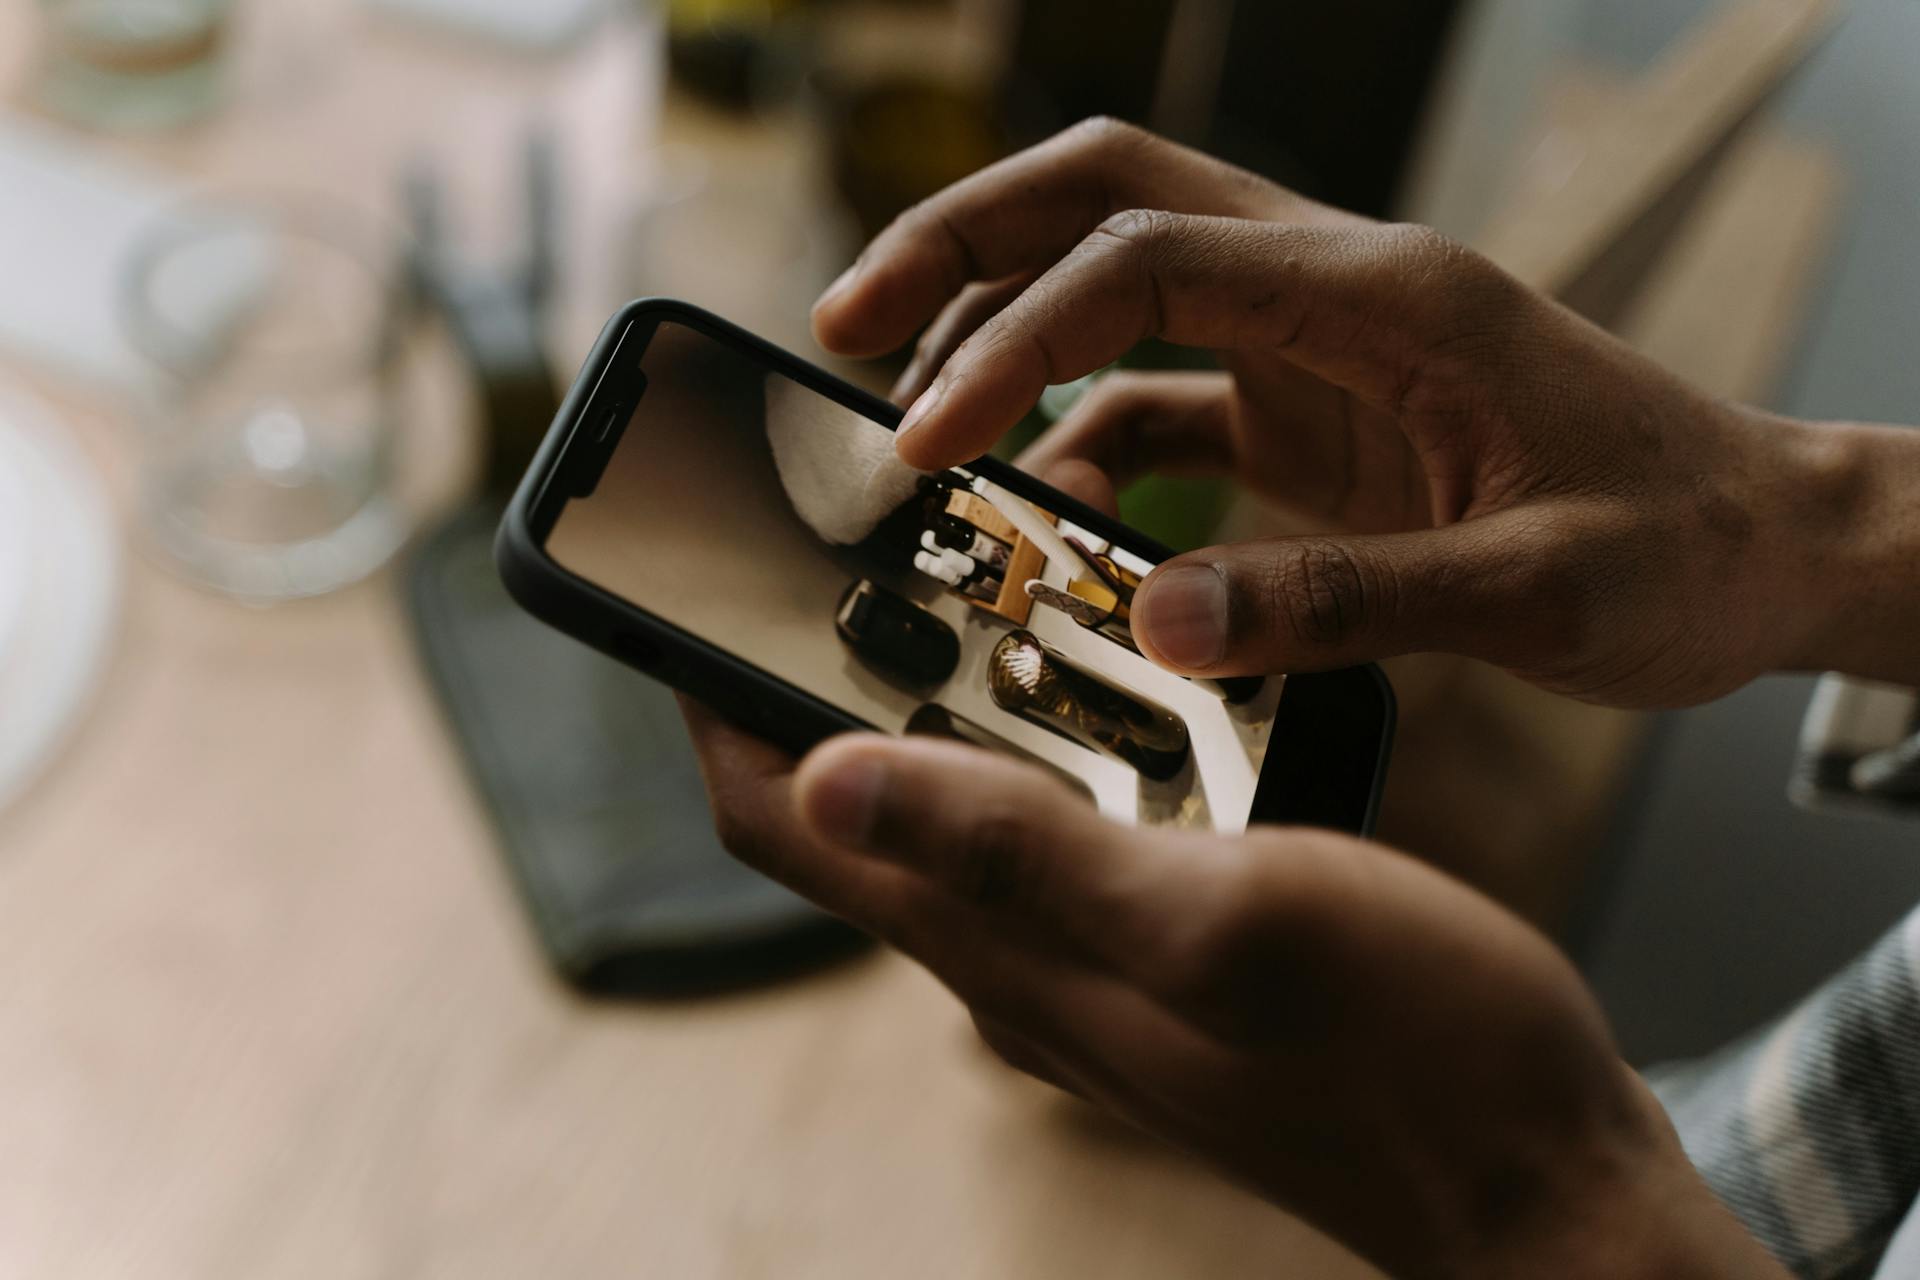 A close-up shot of a man using a phone | Source: Pexels